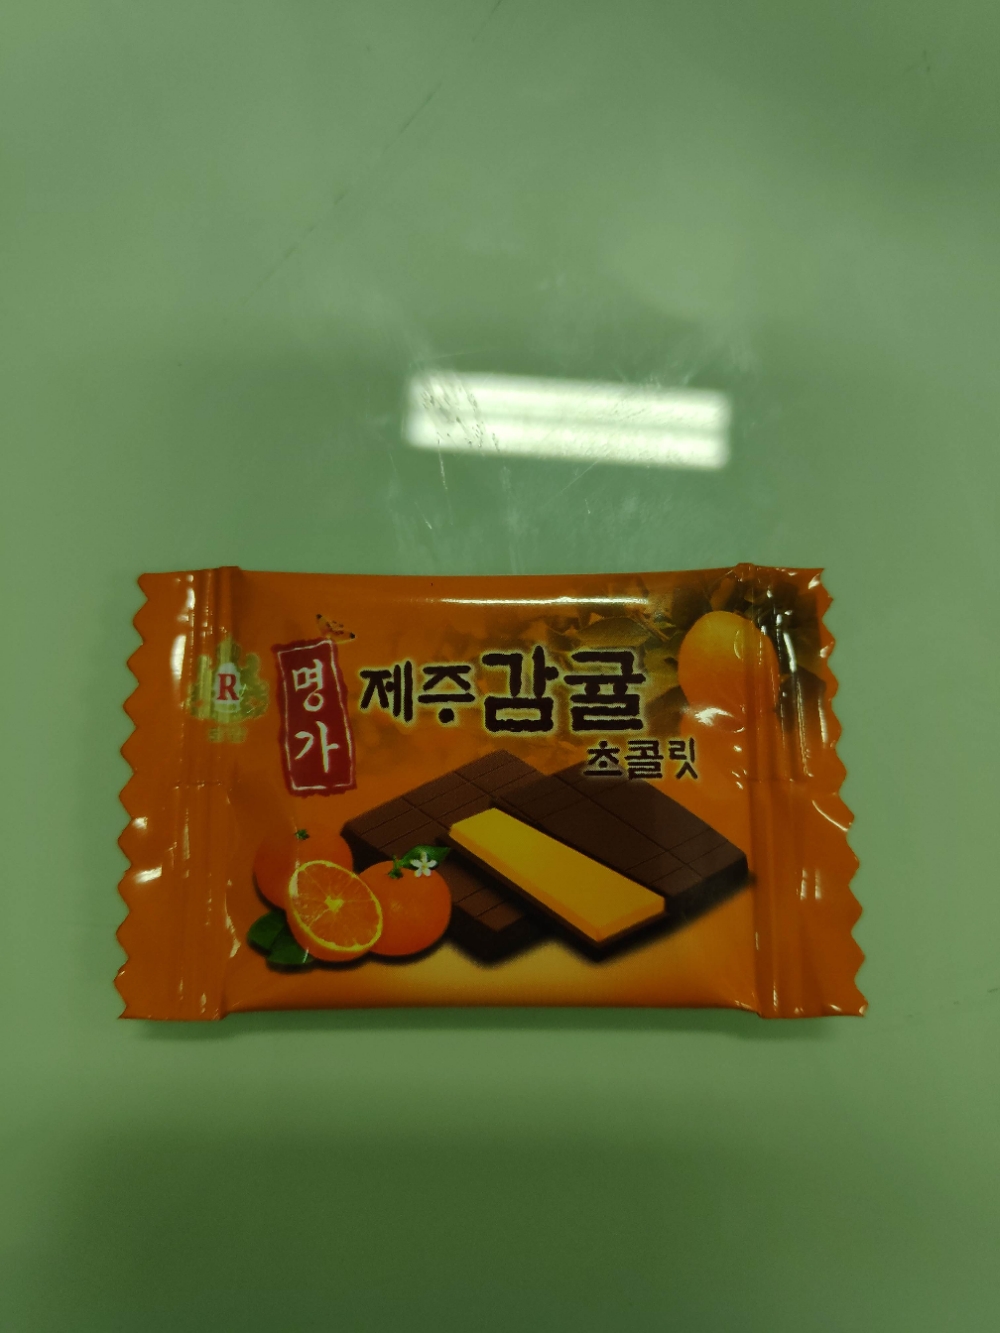 Image for product 22-1678397fcec-Coklat-Korea